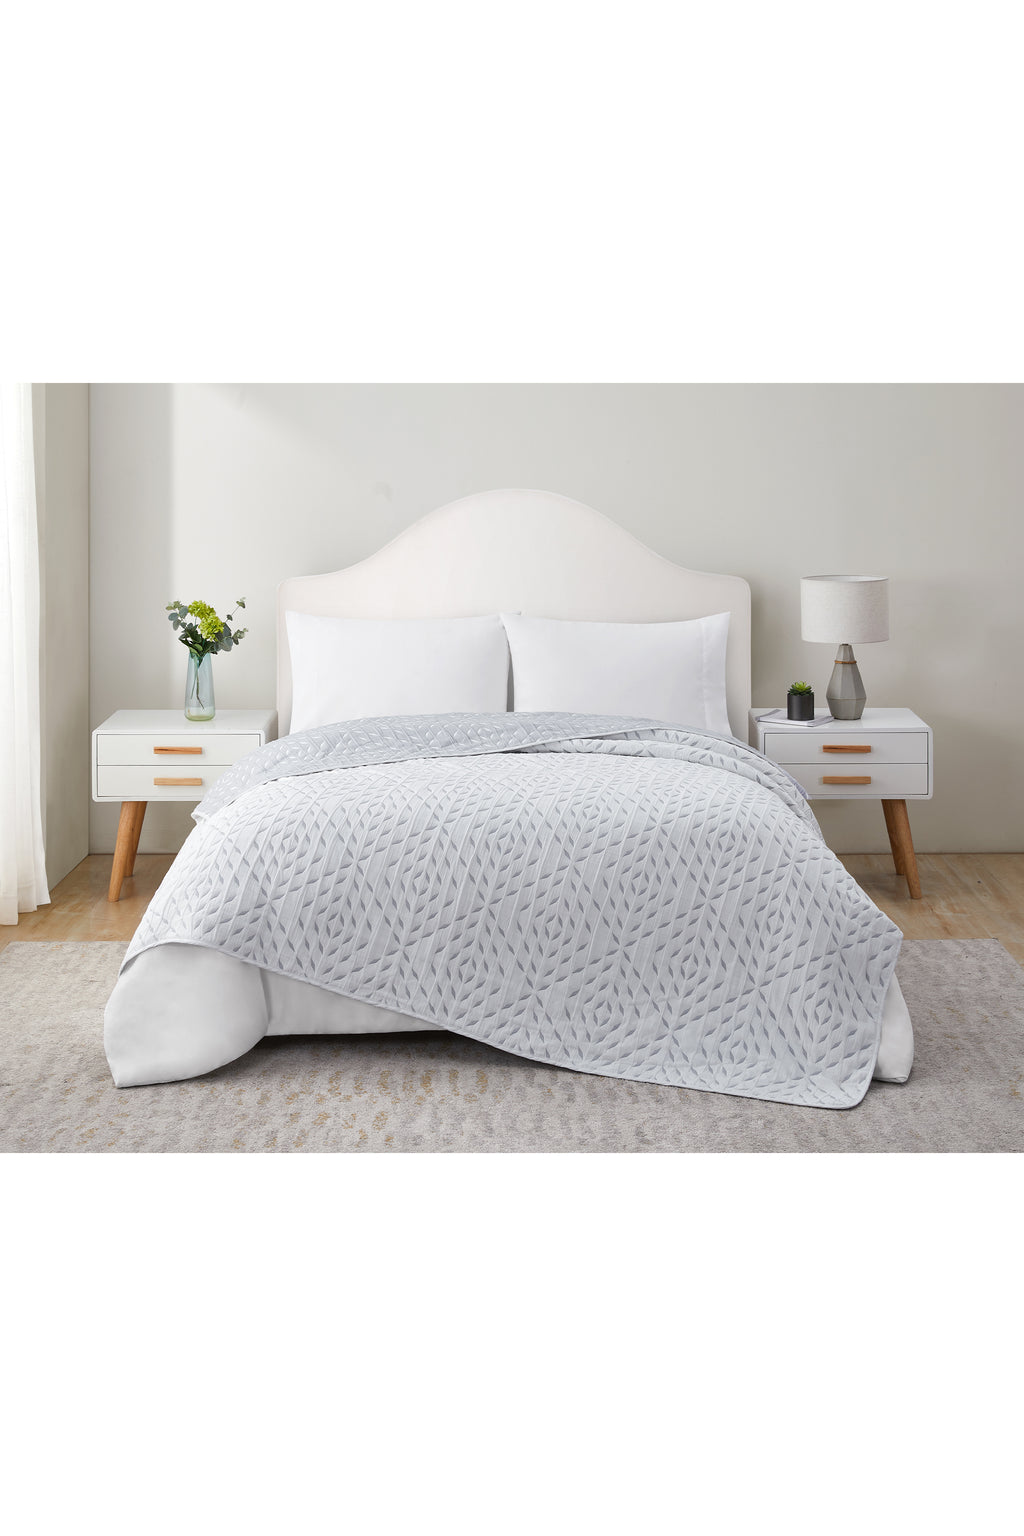 Tahari Home - Queen Coverlet, Reversible Cotton Rich Bedding, Lightweight  Comfort for All Seasons (Wren Grey/White, Queen) : : Home